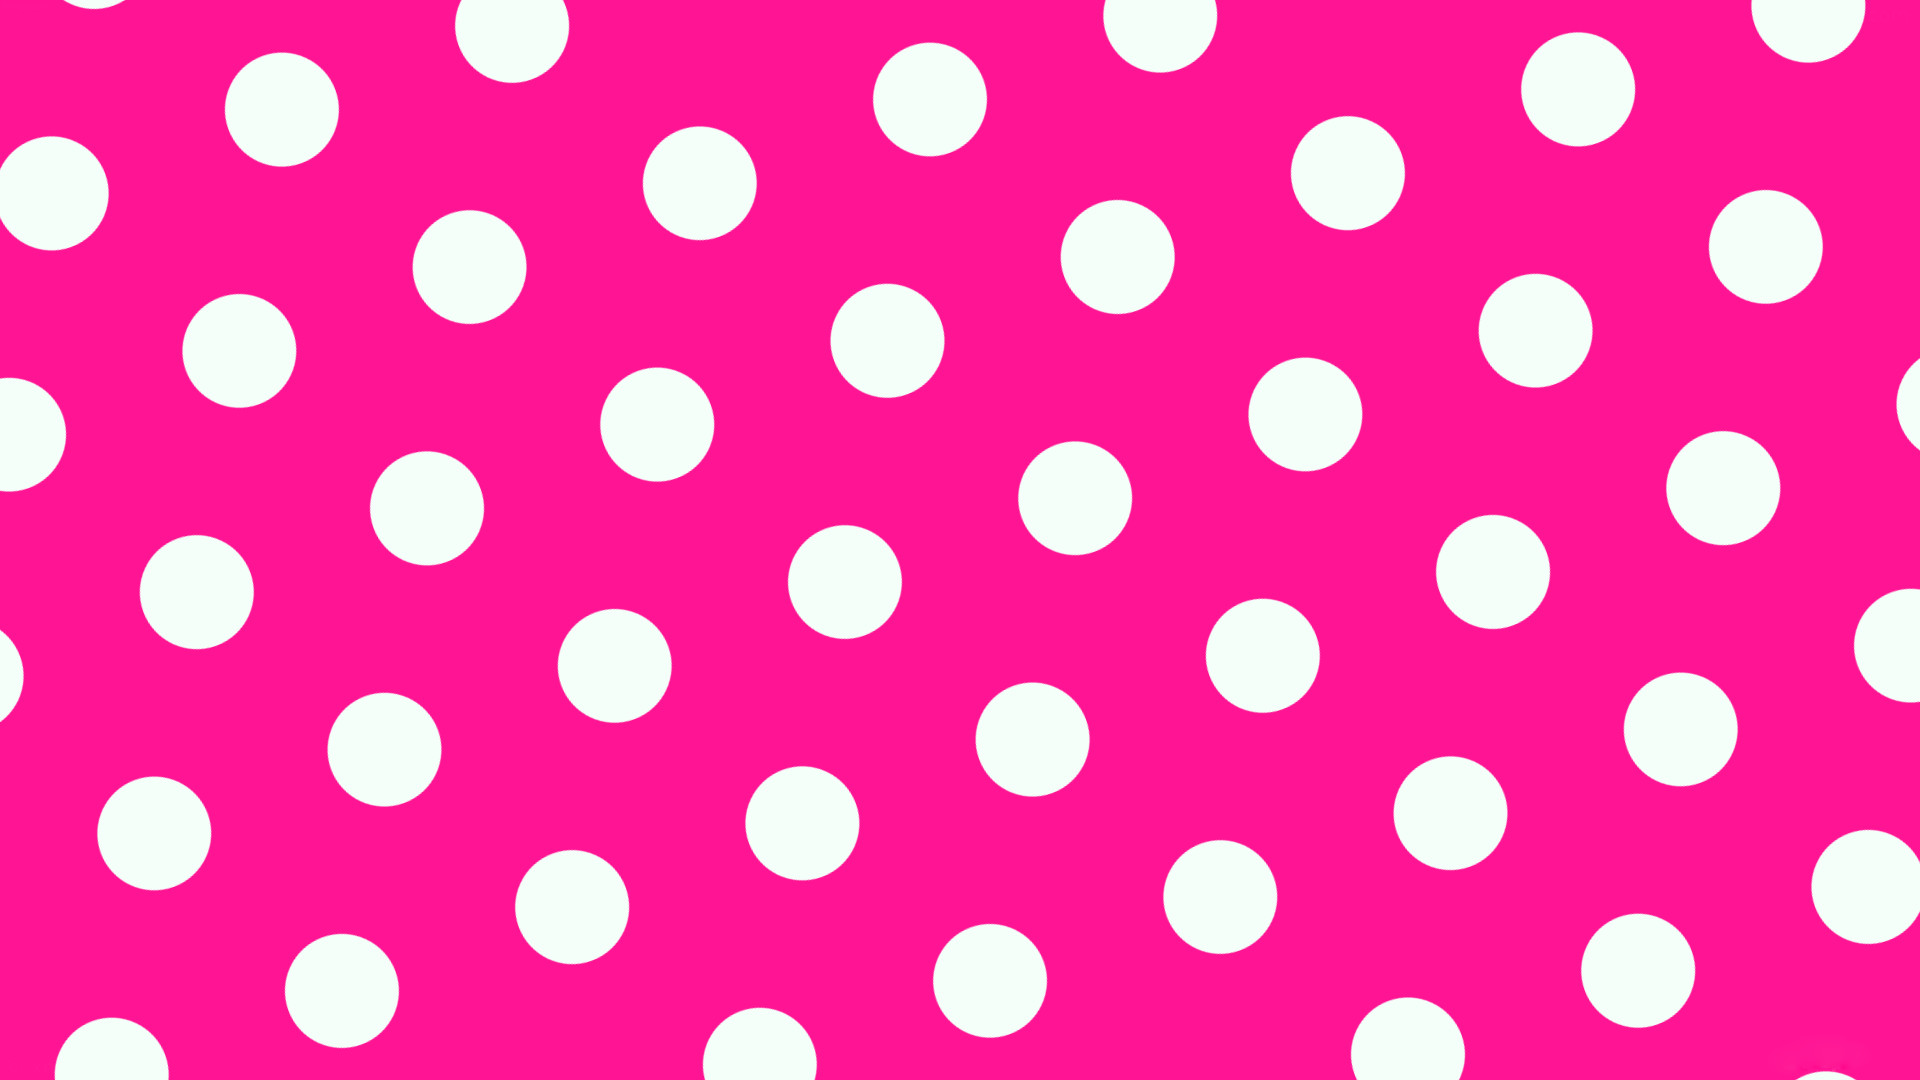 Polka Dot Wallpaper For Computer (66+ images)